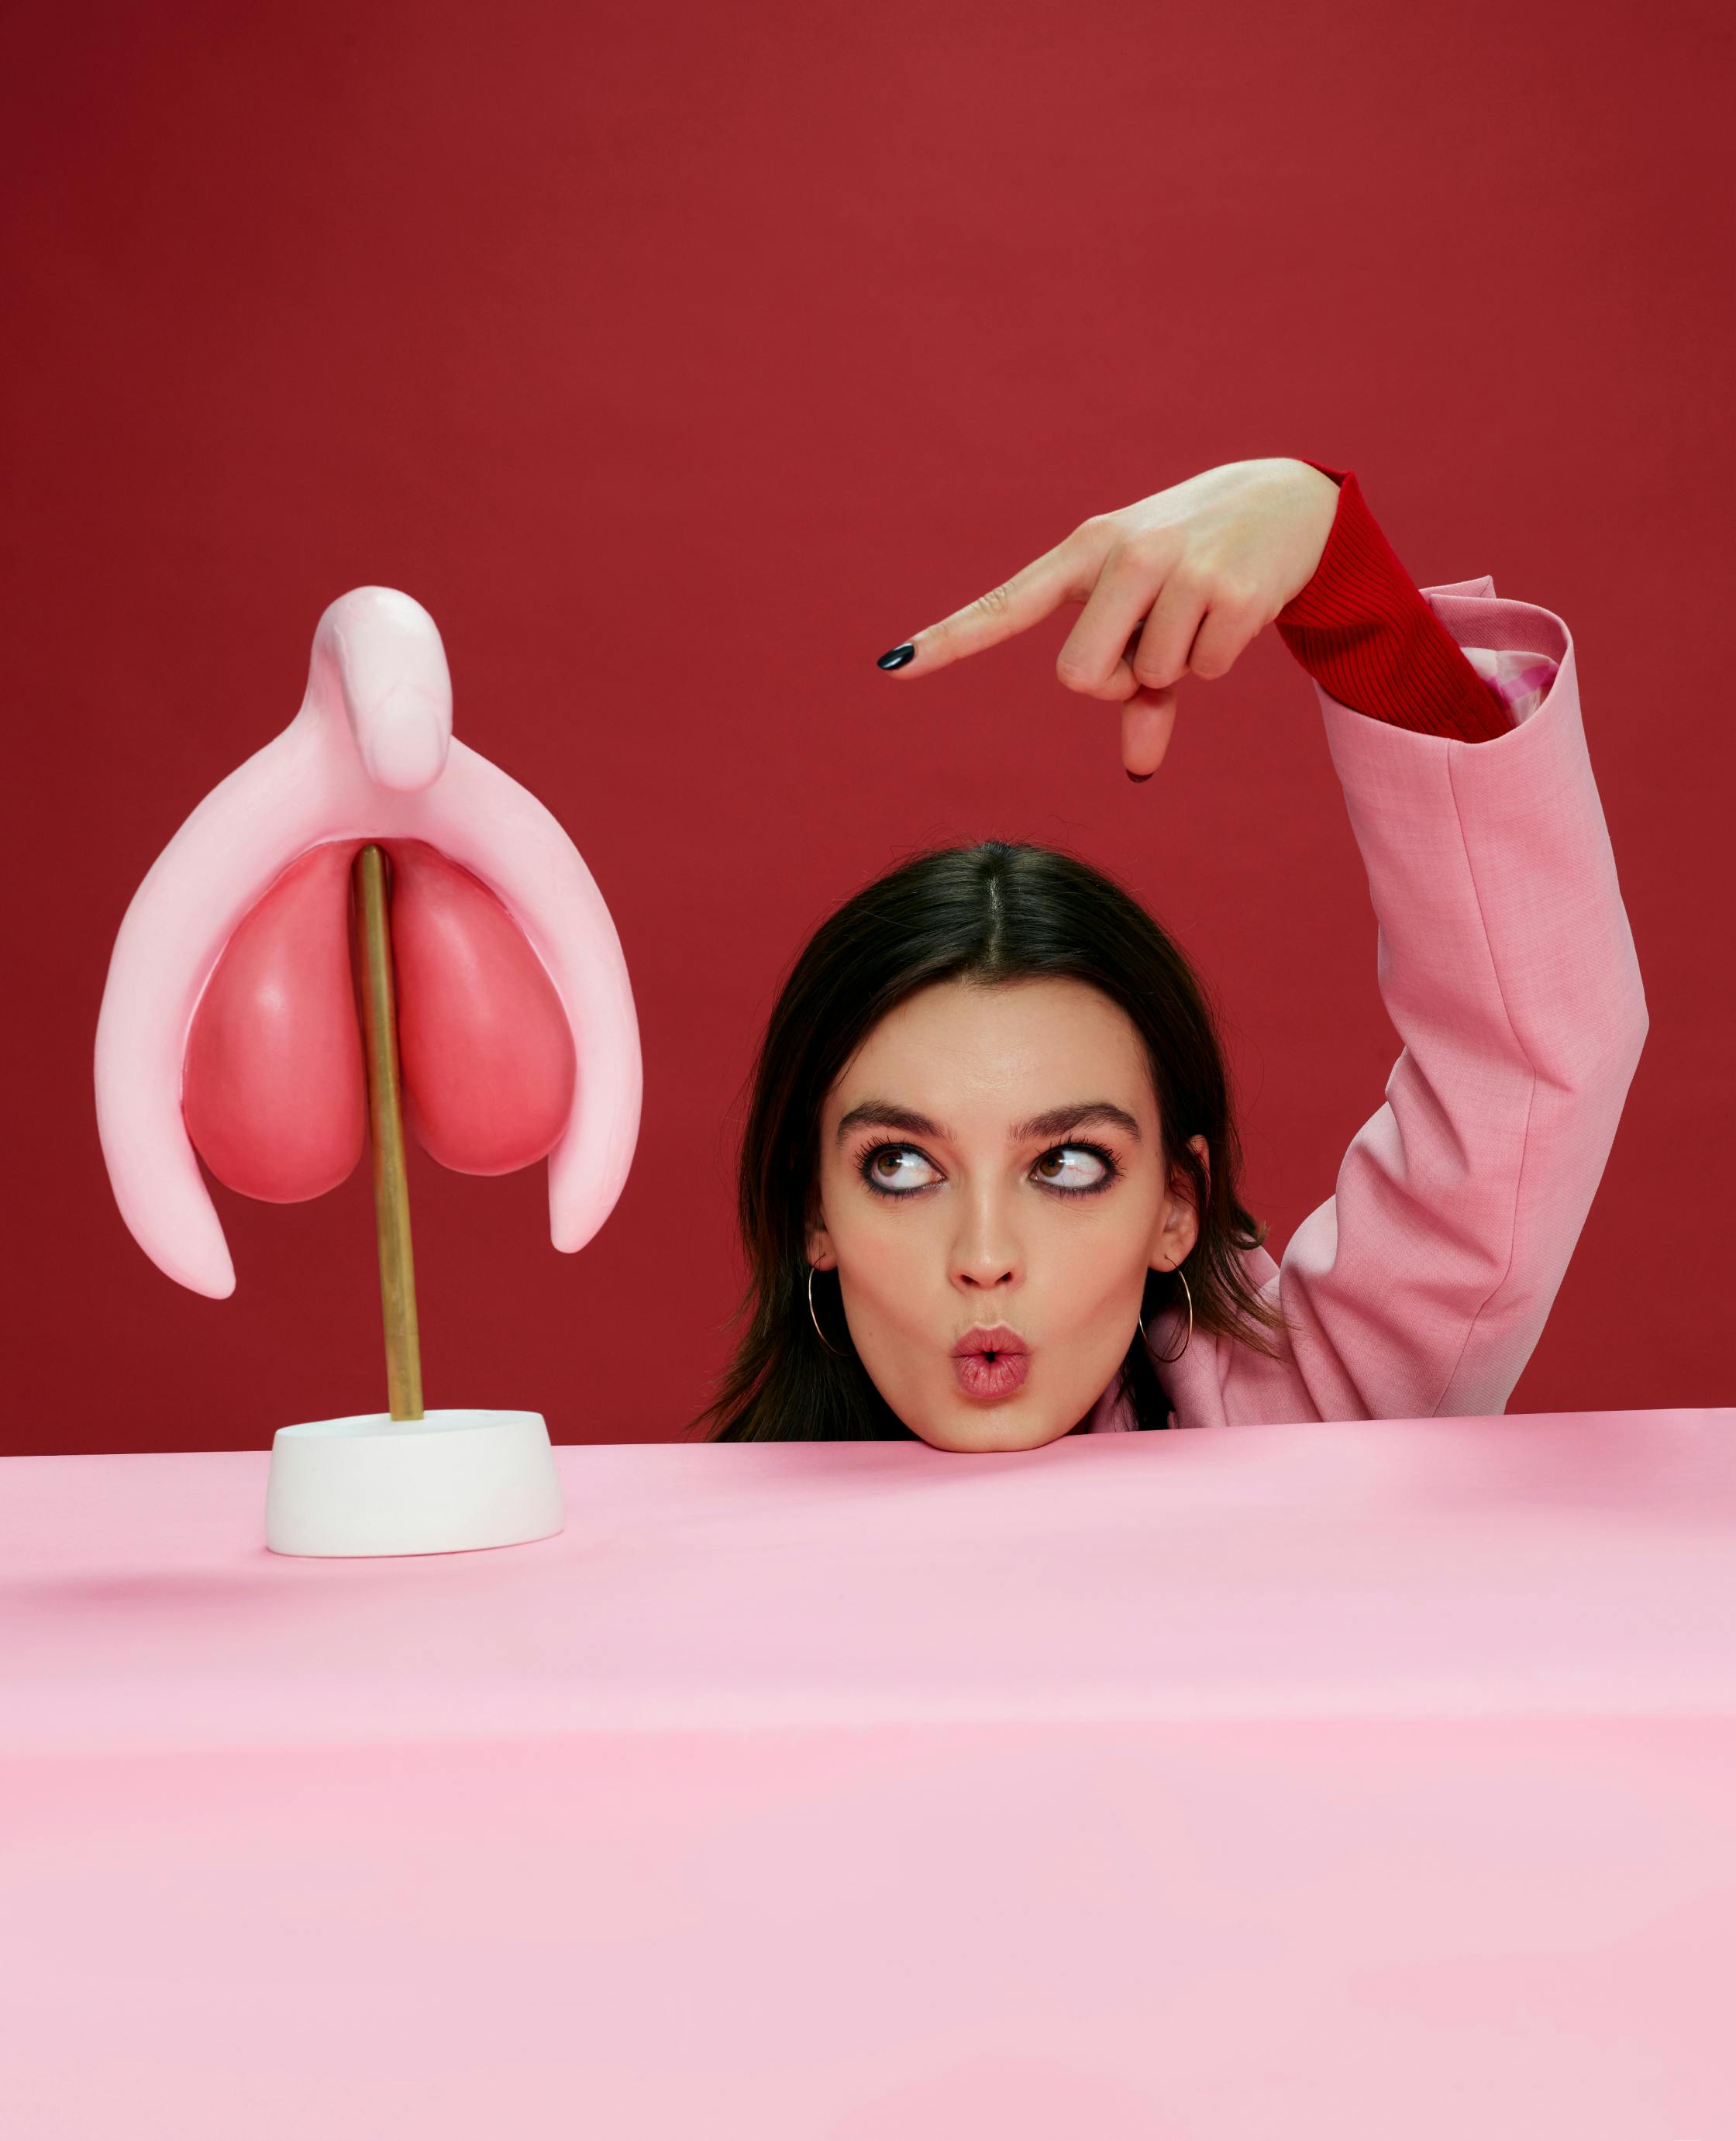 Emma Mackey with a model of a clitoris